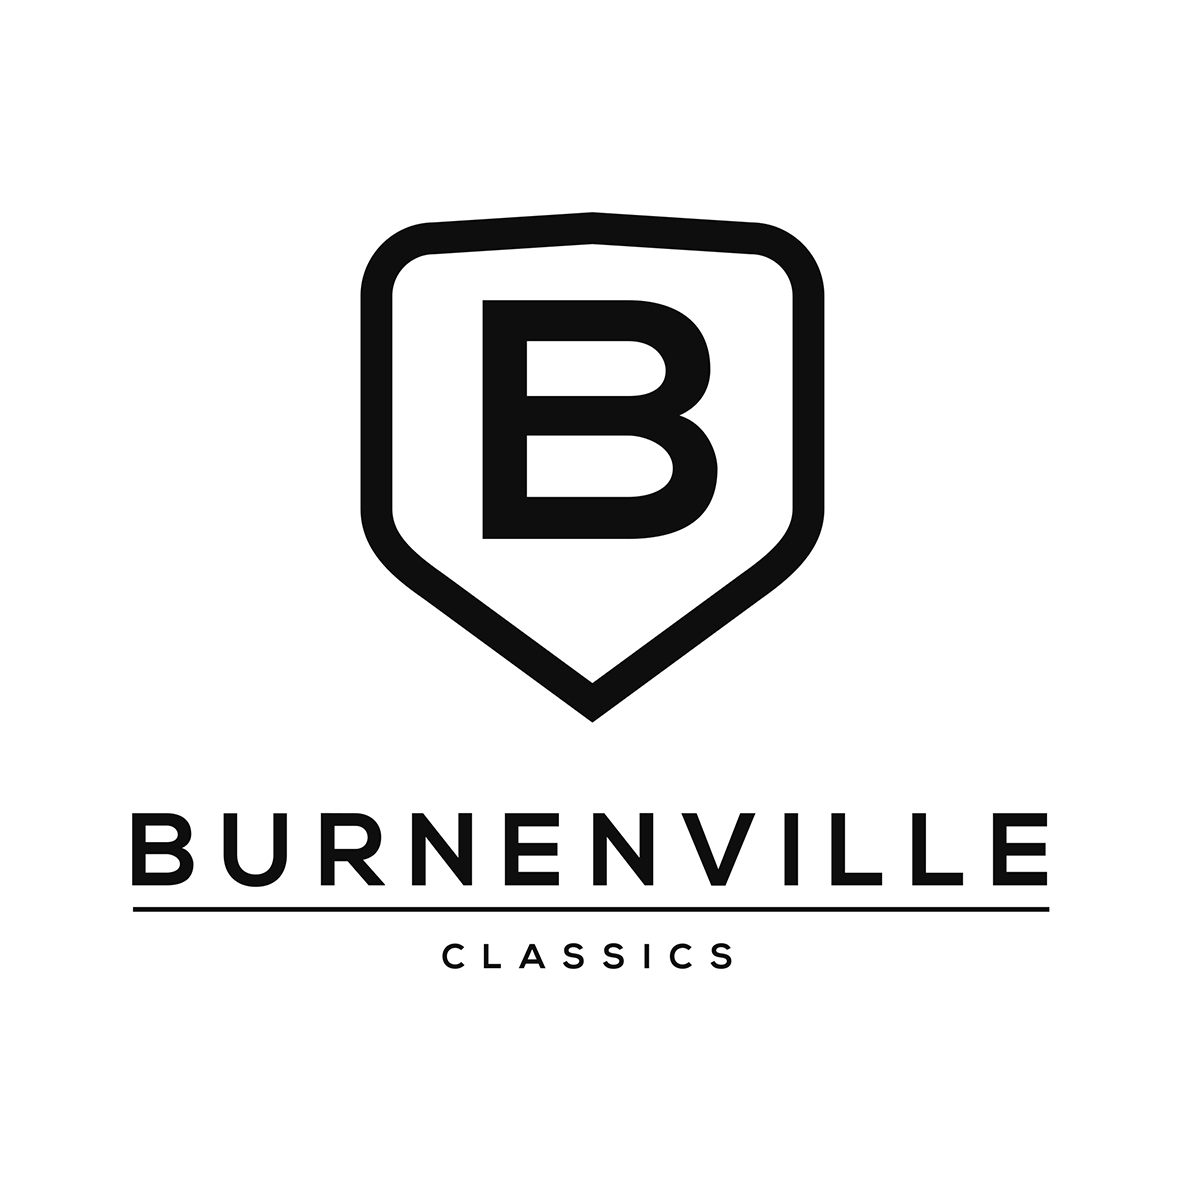 Burnenville